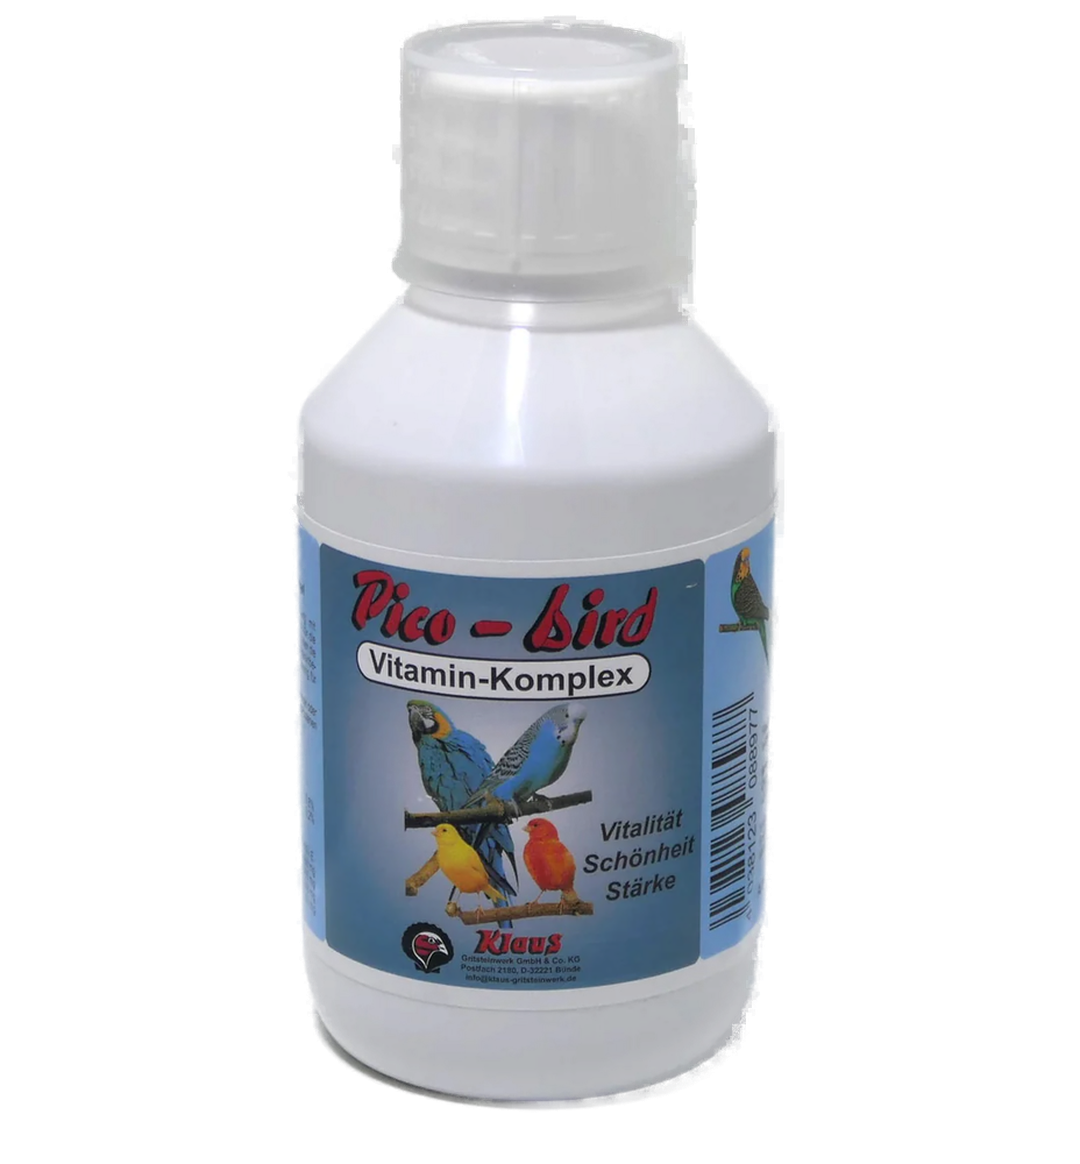 Pico-Bird Vitaminkomplex